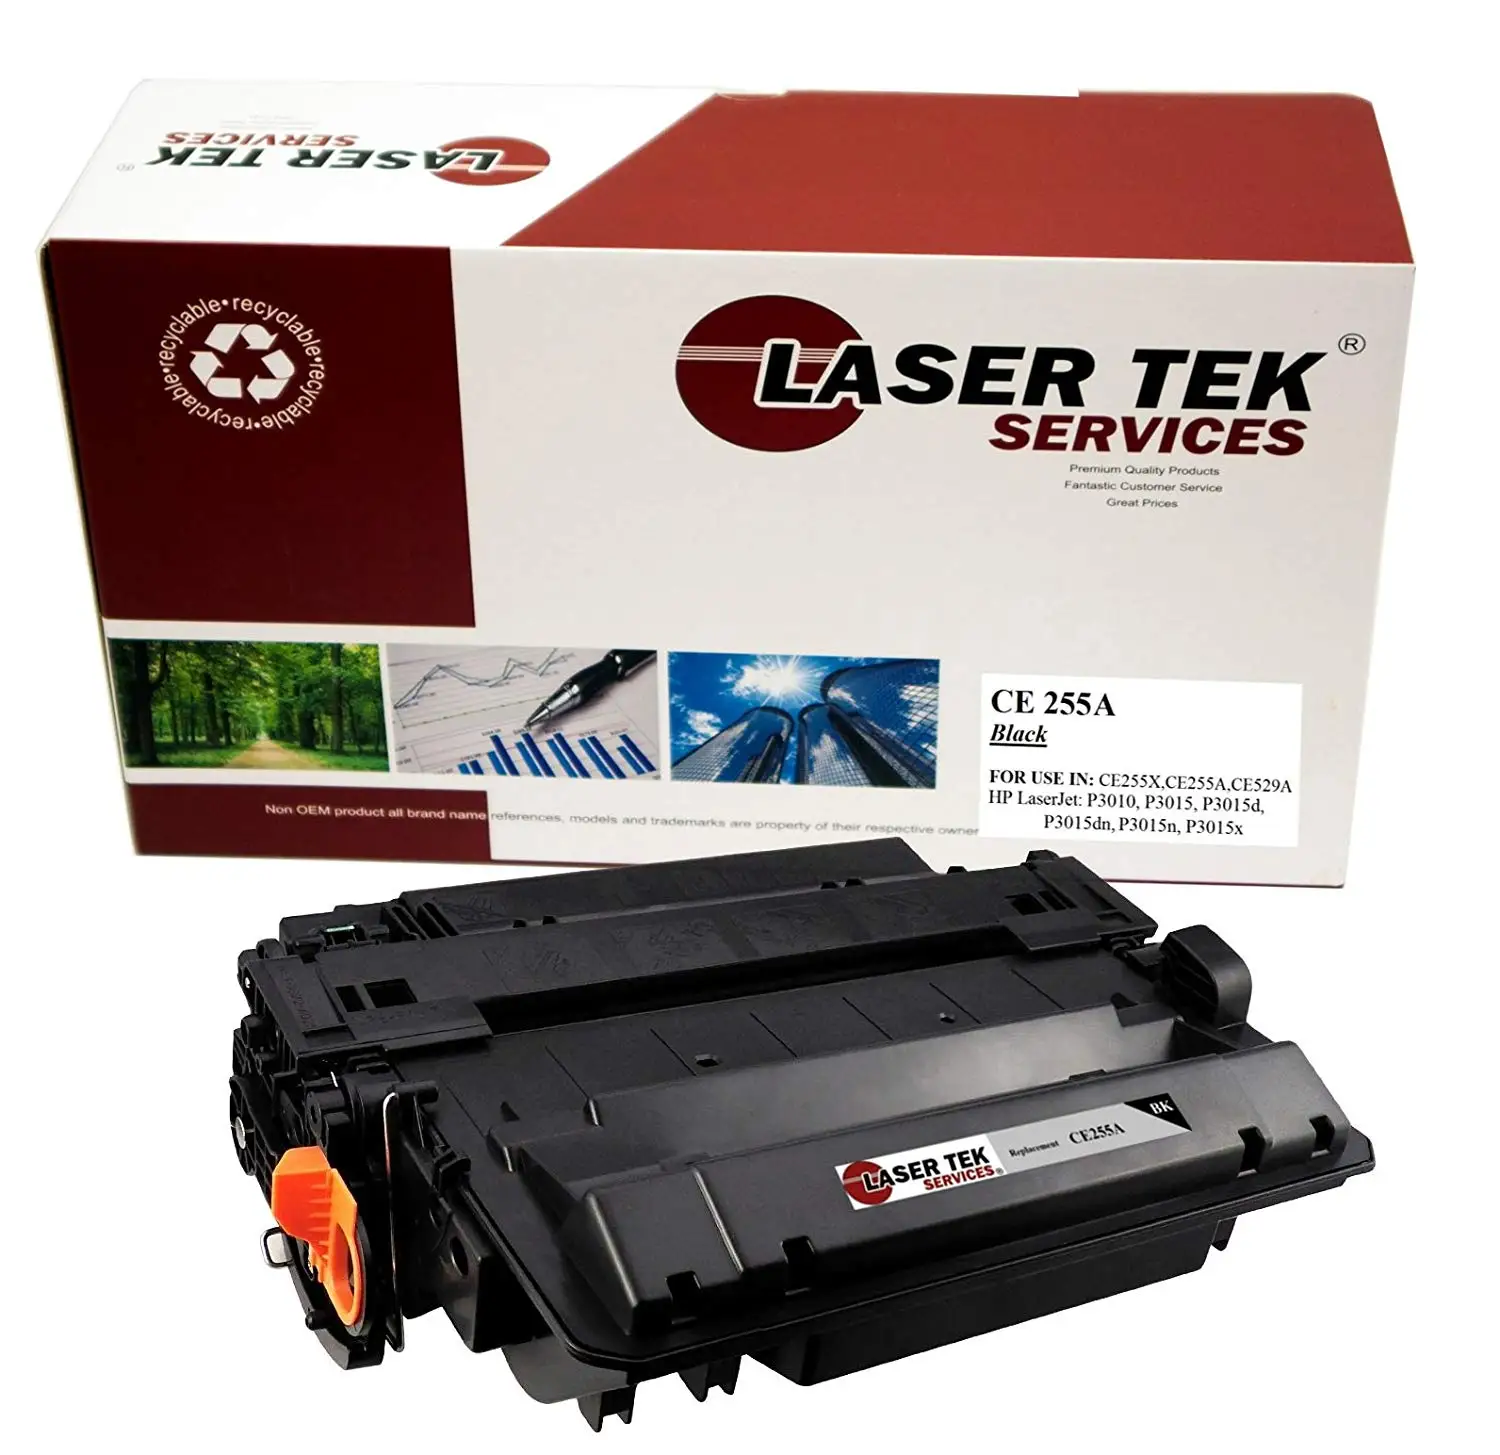 hp laserjet 6l printer $50